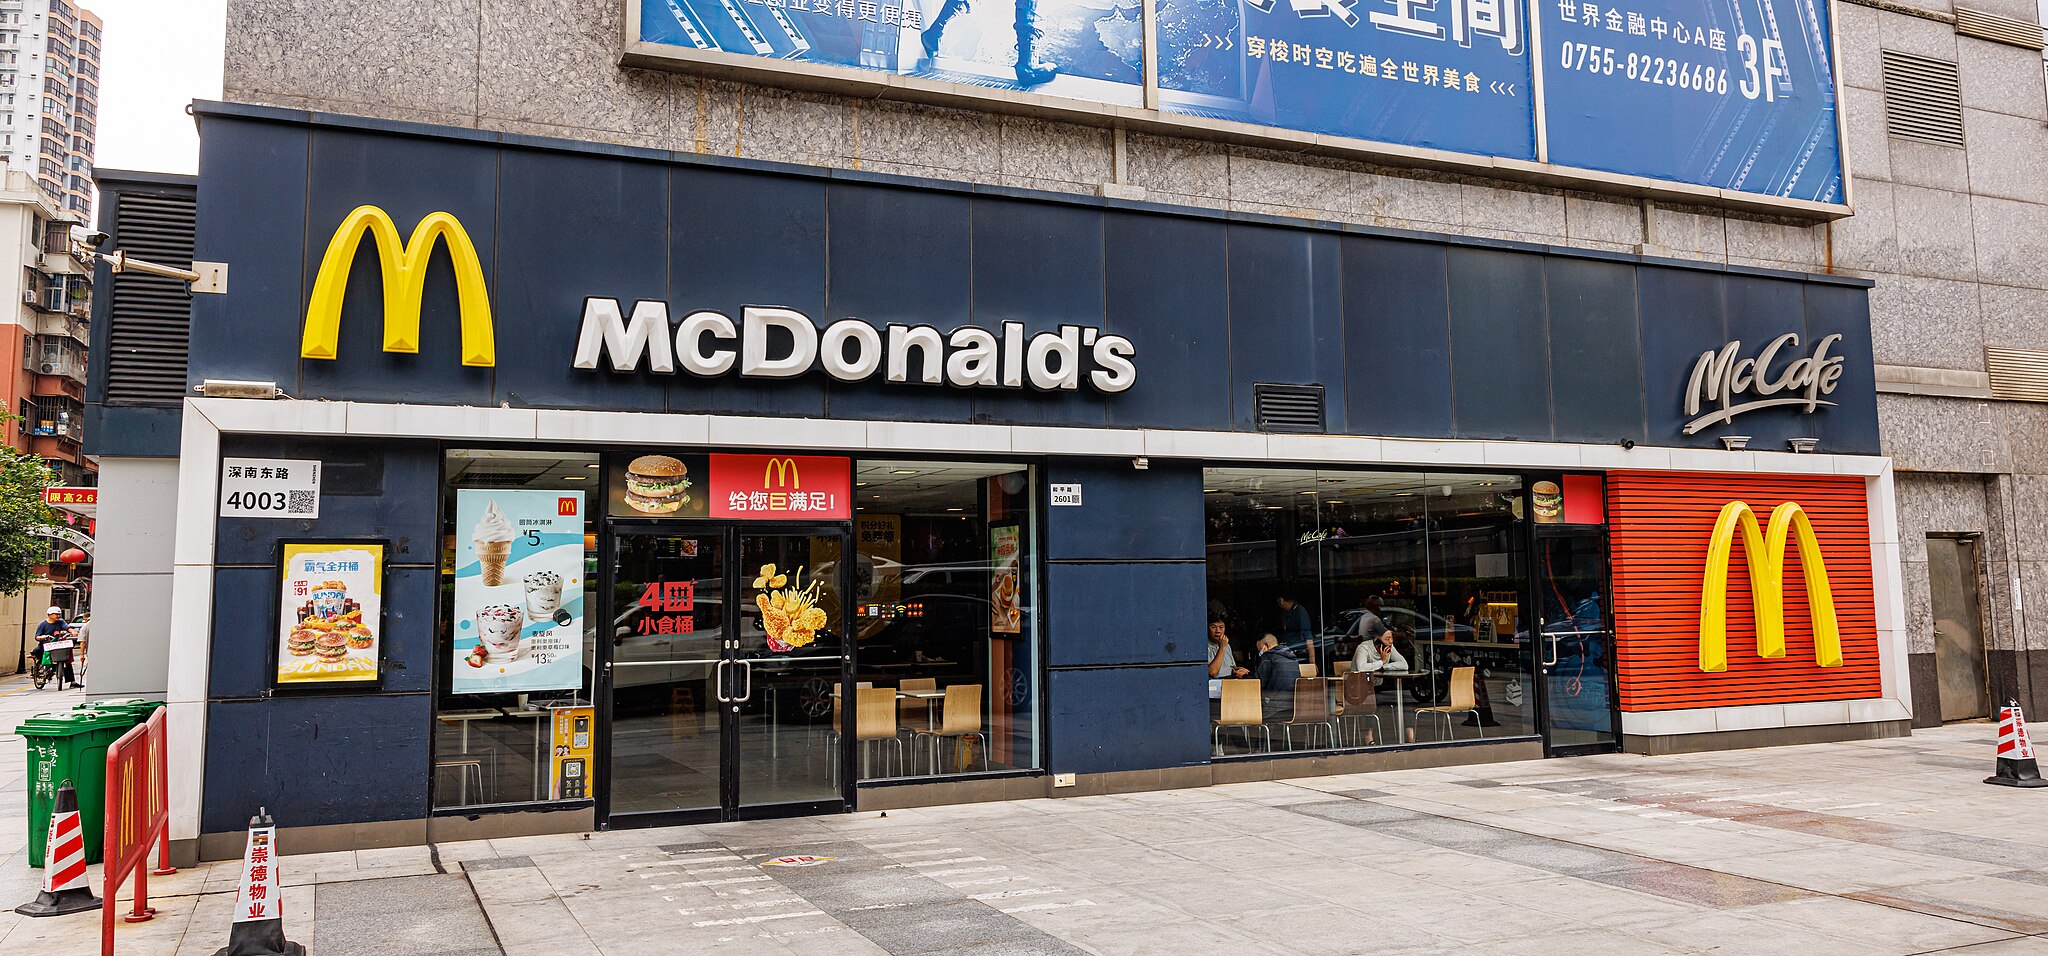 A McDonald's Restaurant in Shennan East Road, Shenzhen (2)